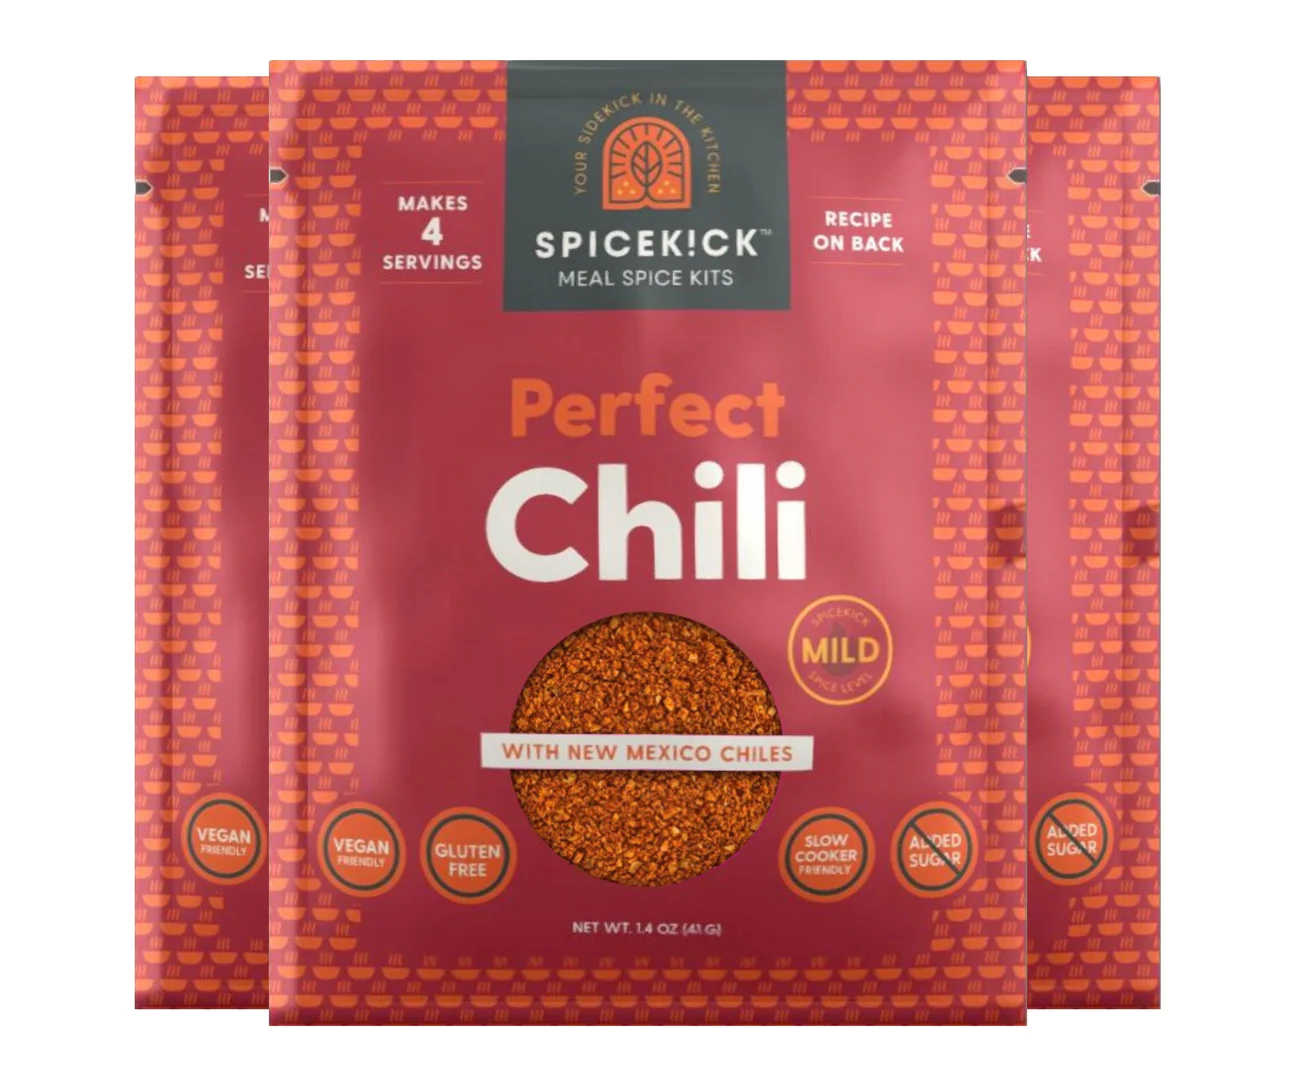 Perfect Chili Spicekick spice kit